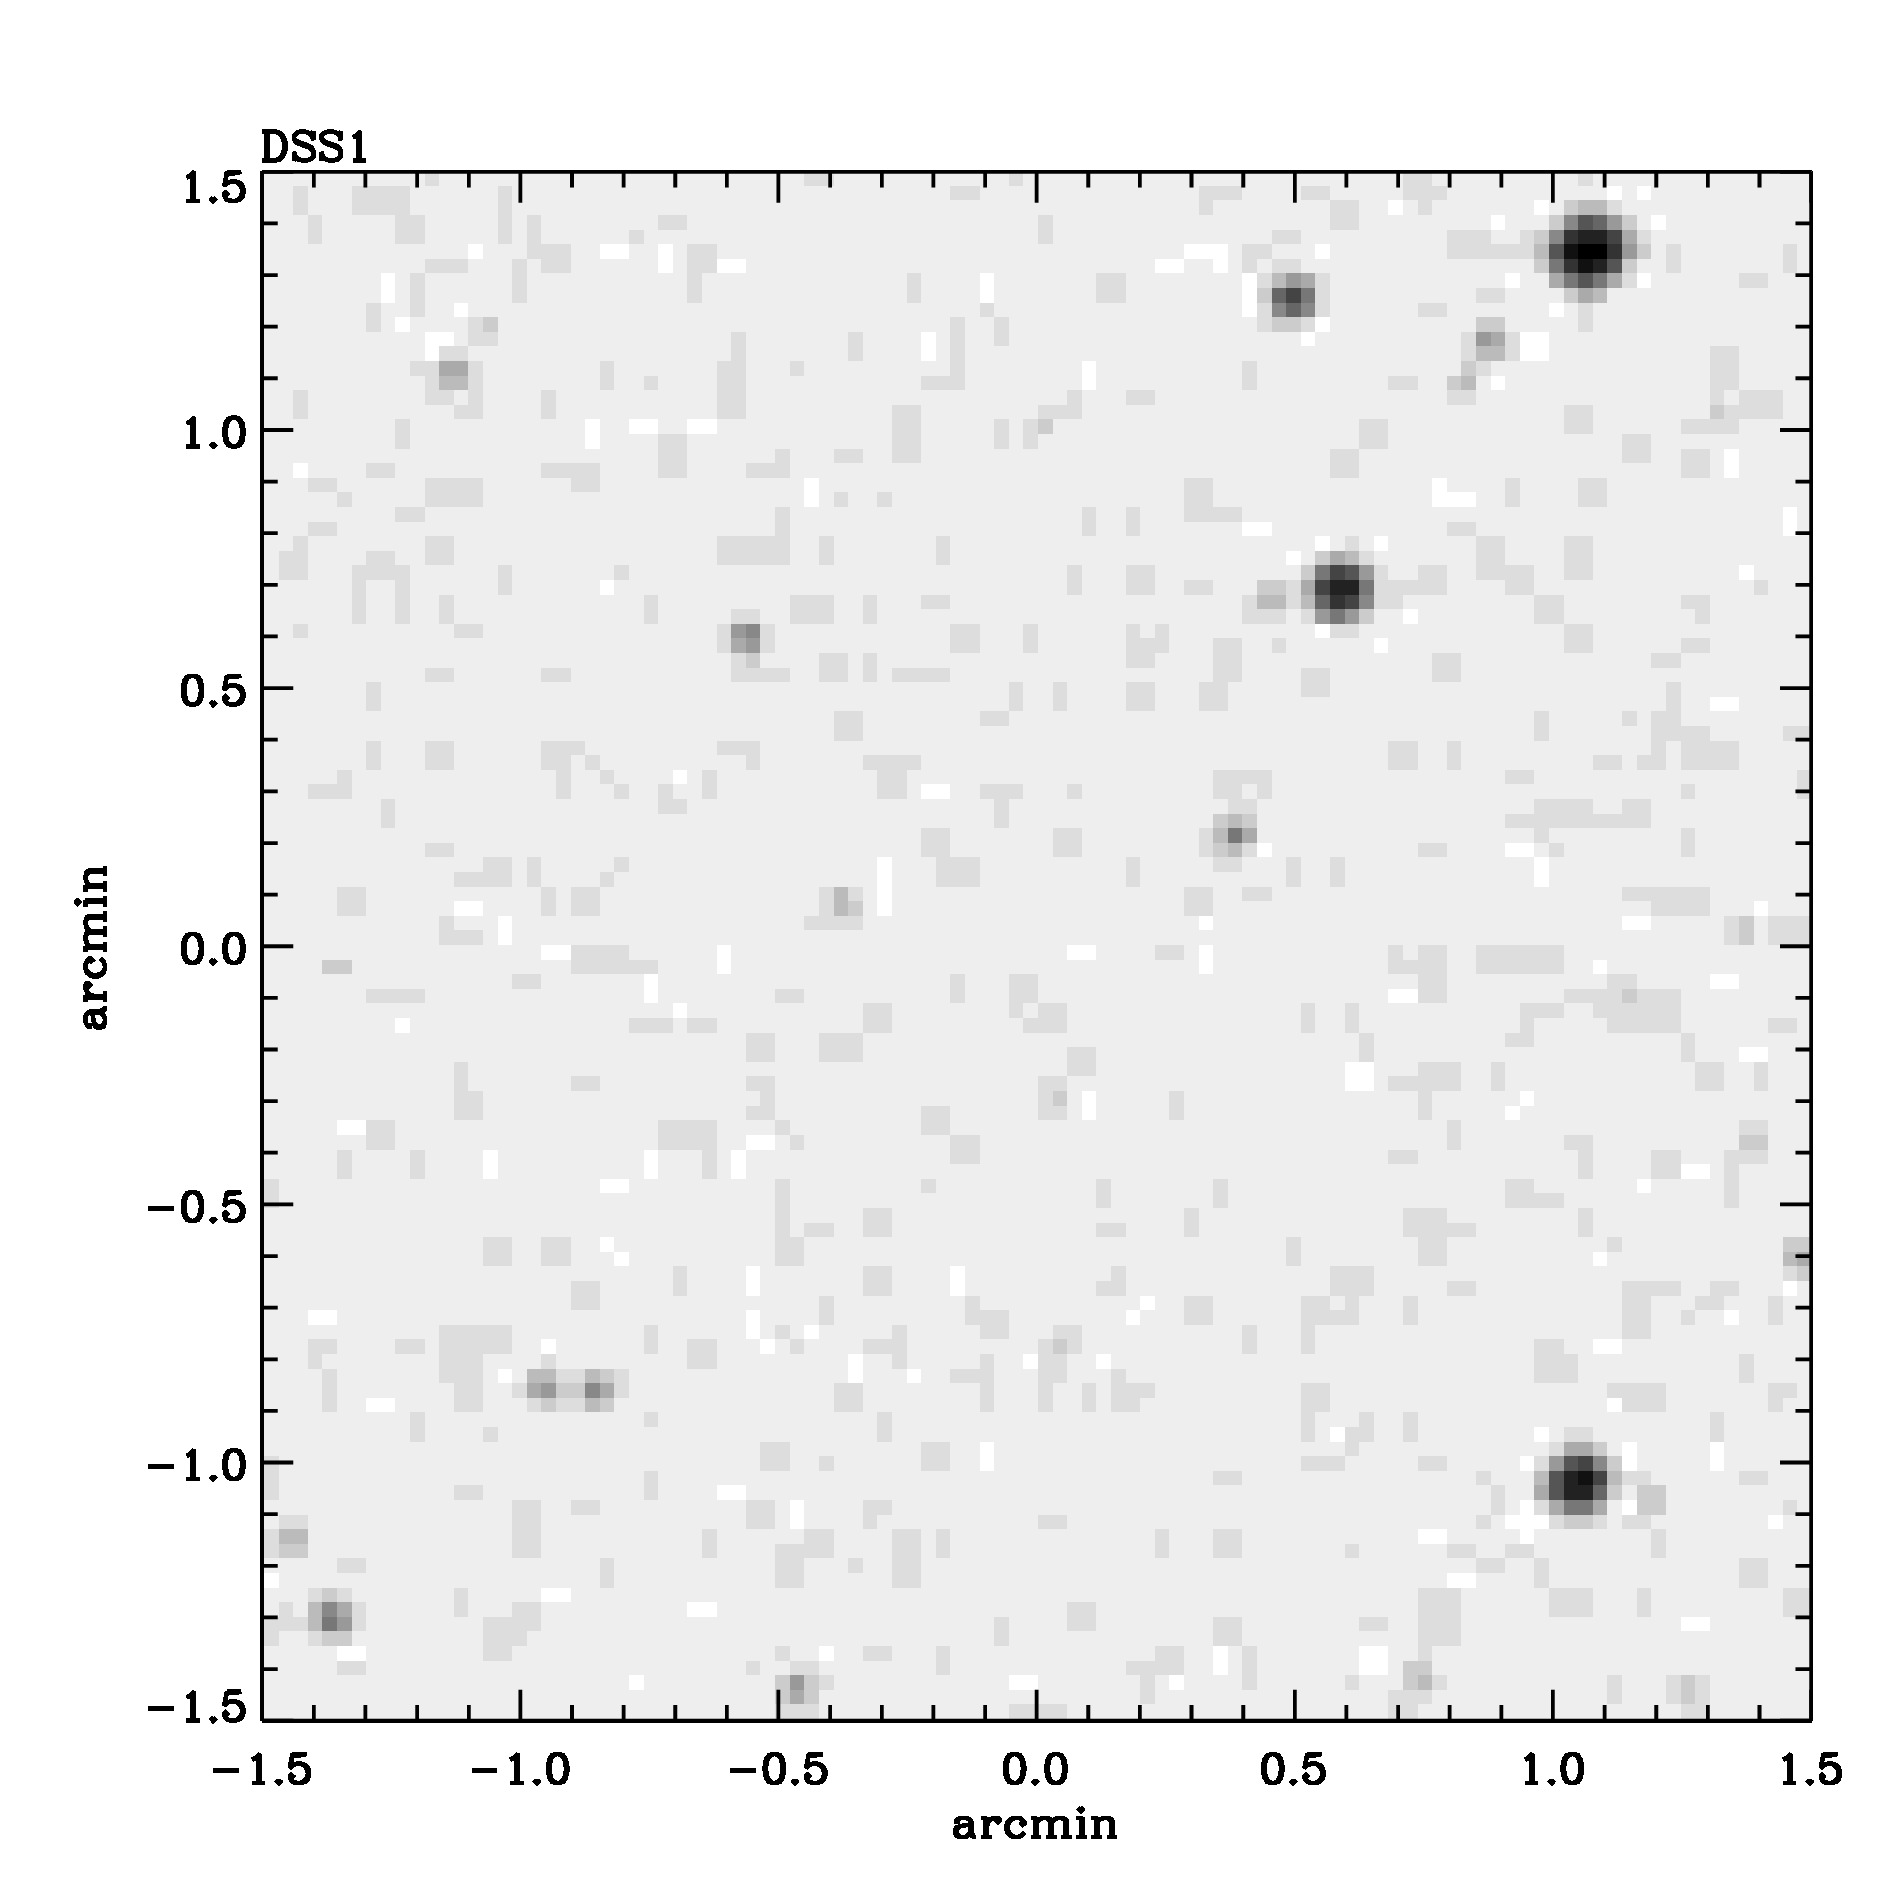 Optical image for SWIFT J1708.9-4404